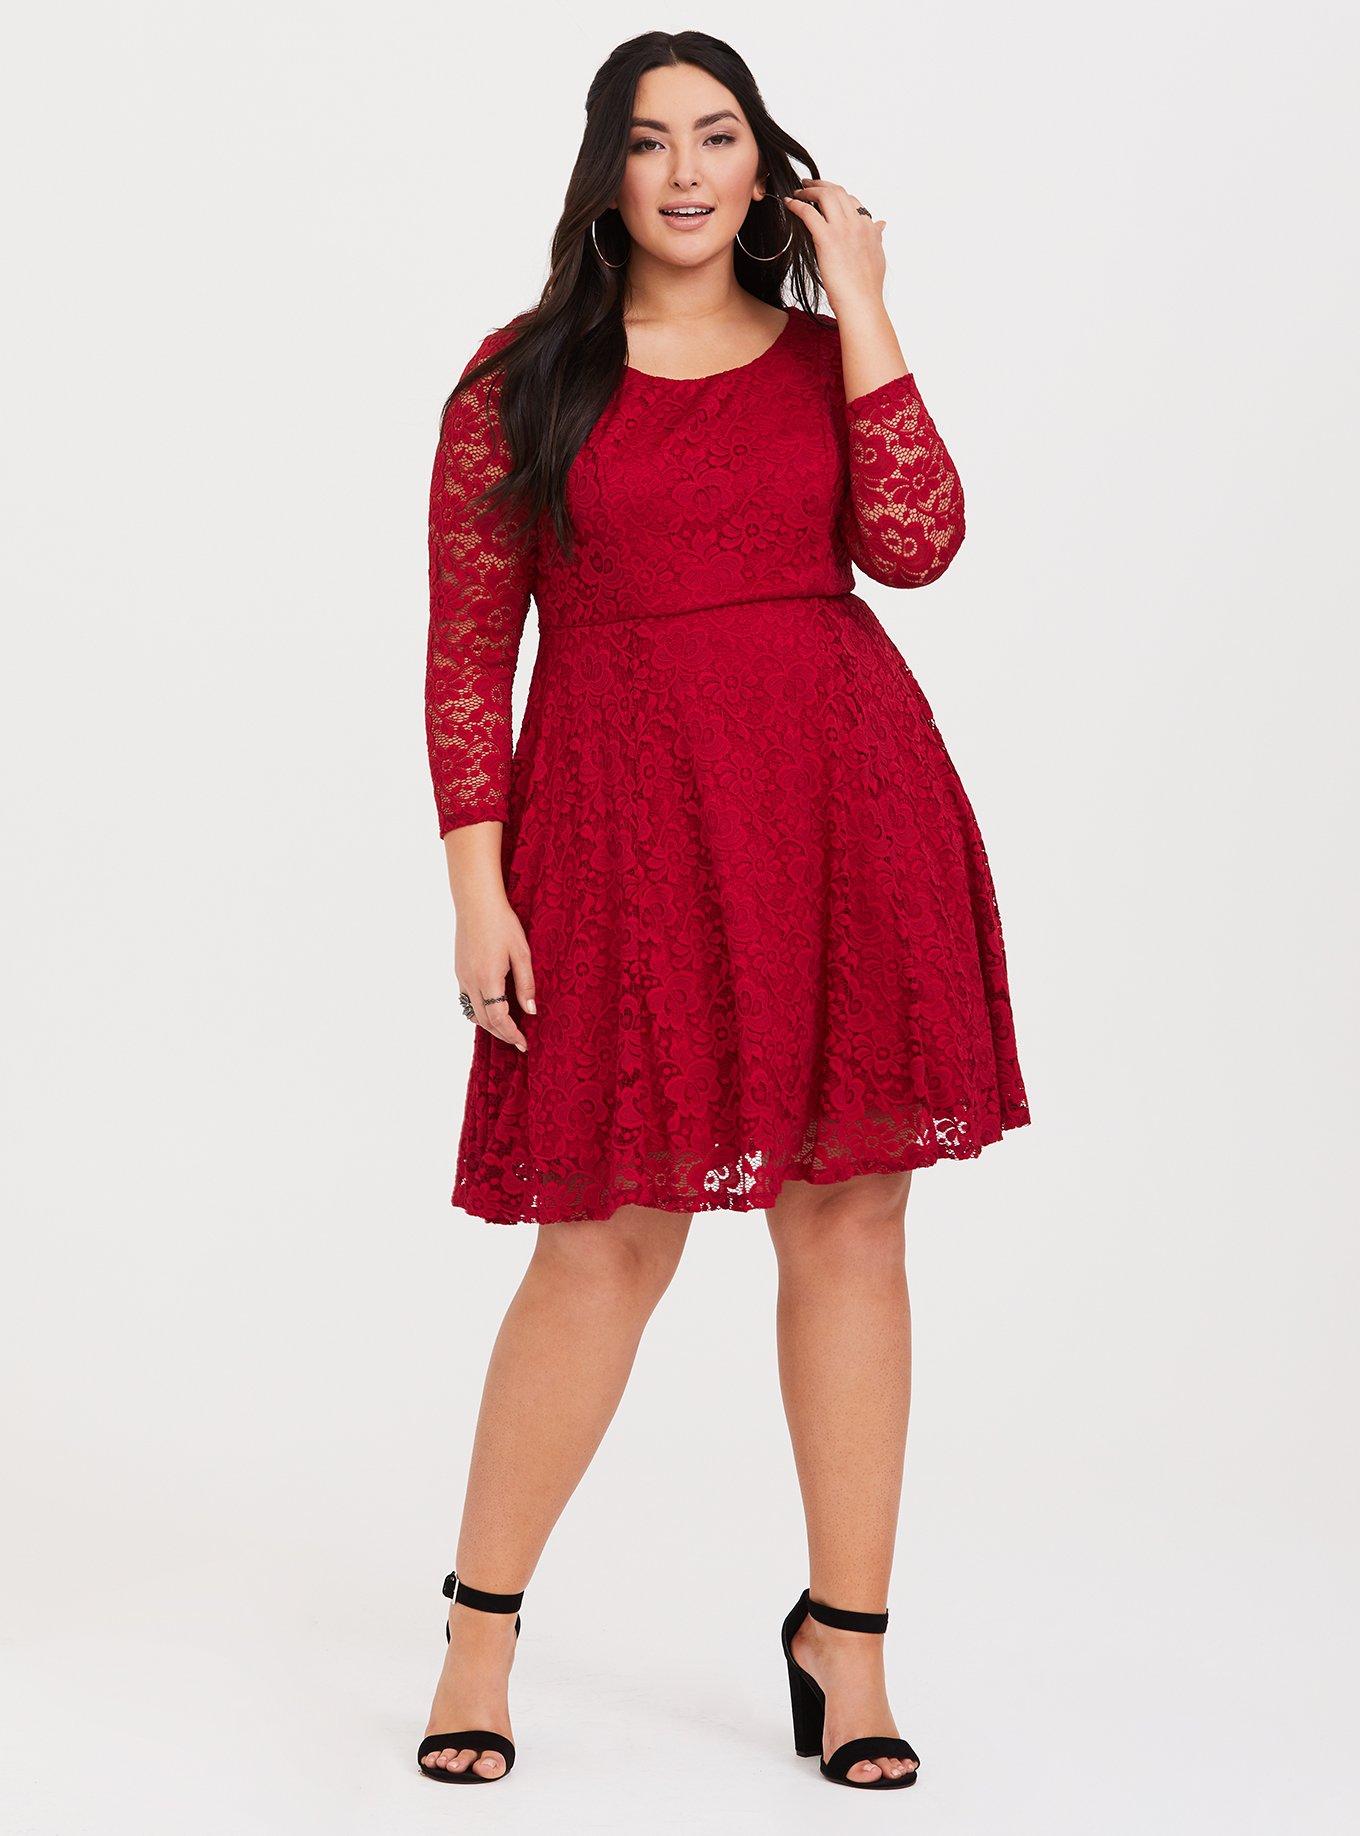 Plus Size Red Lace Dress - Torrid